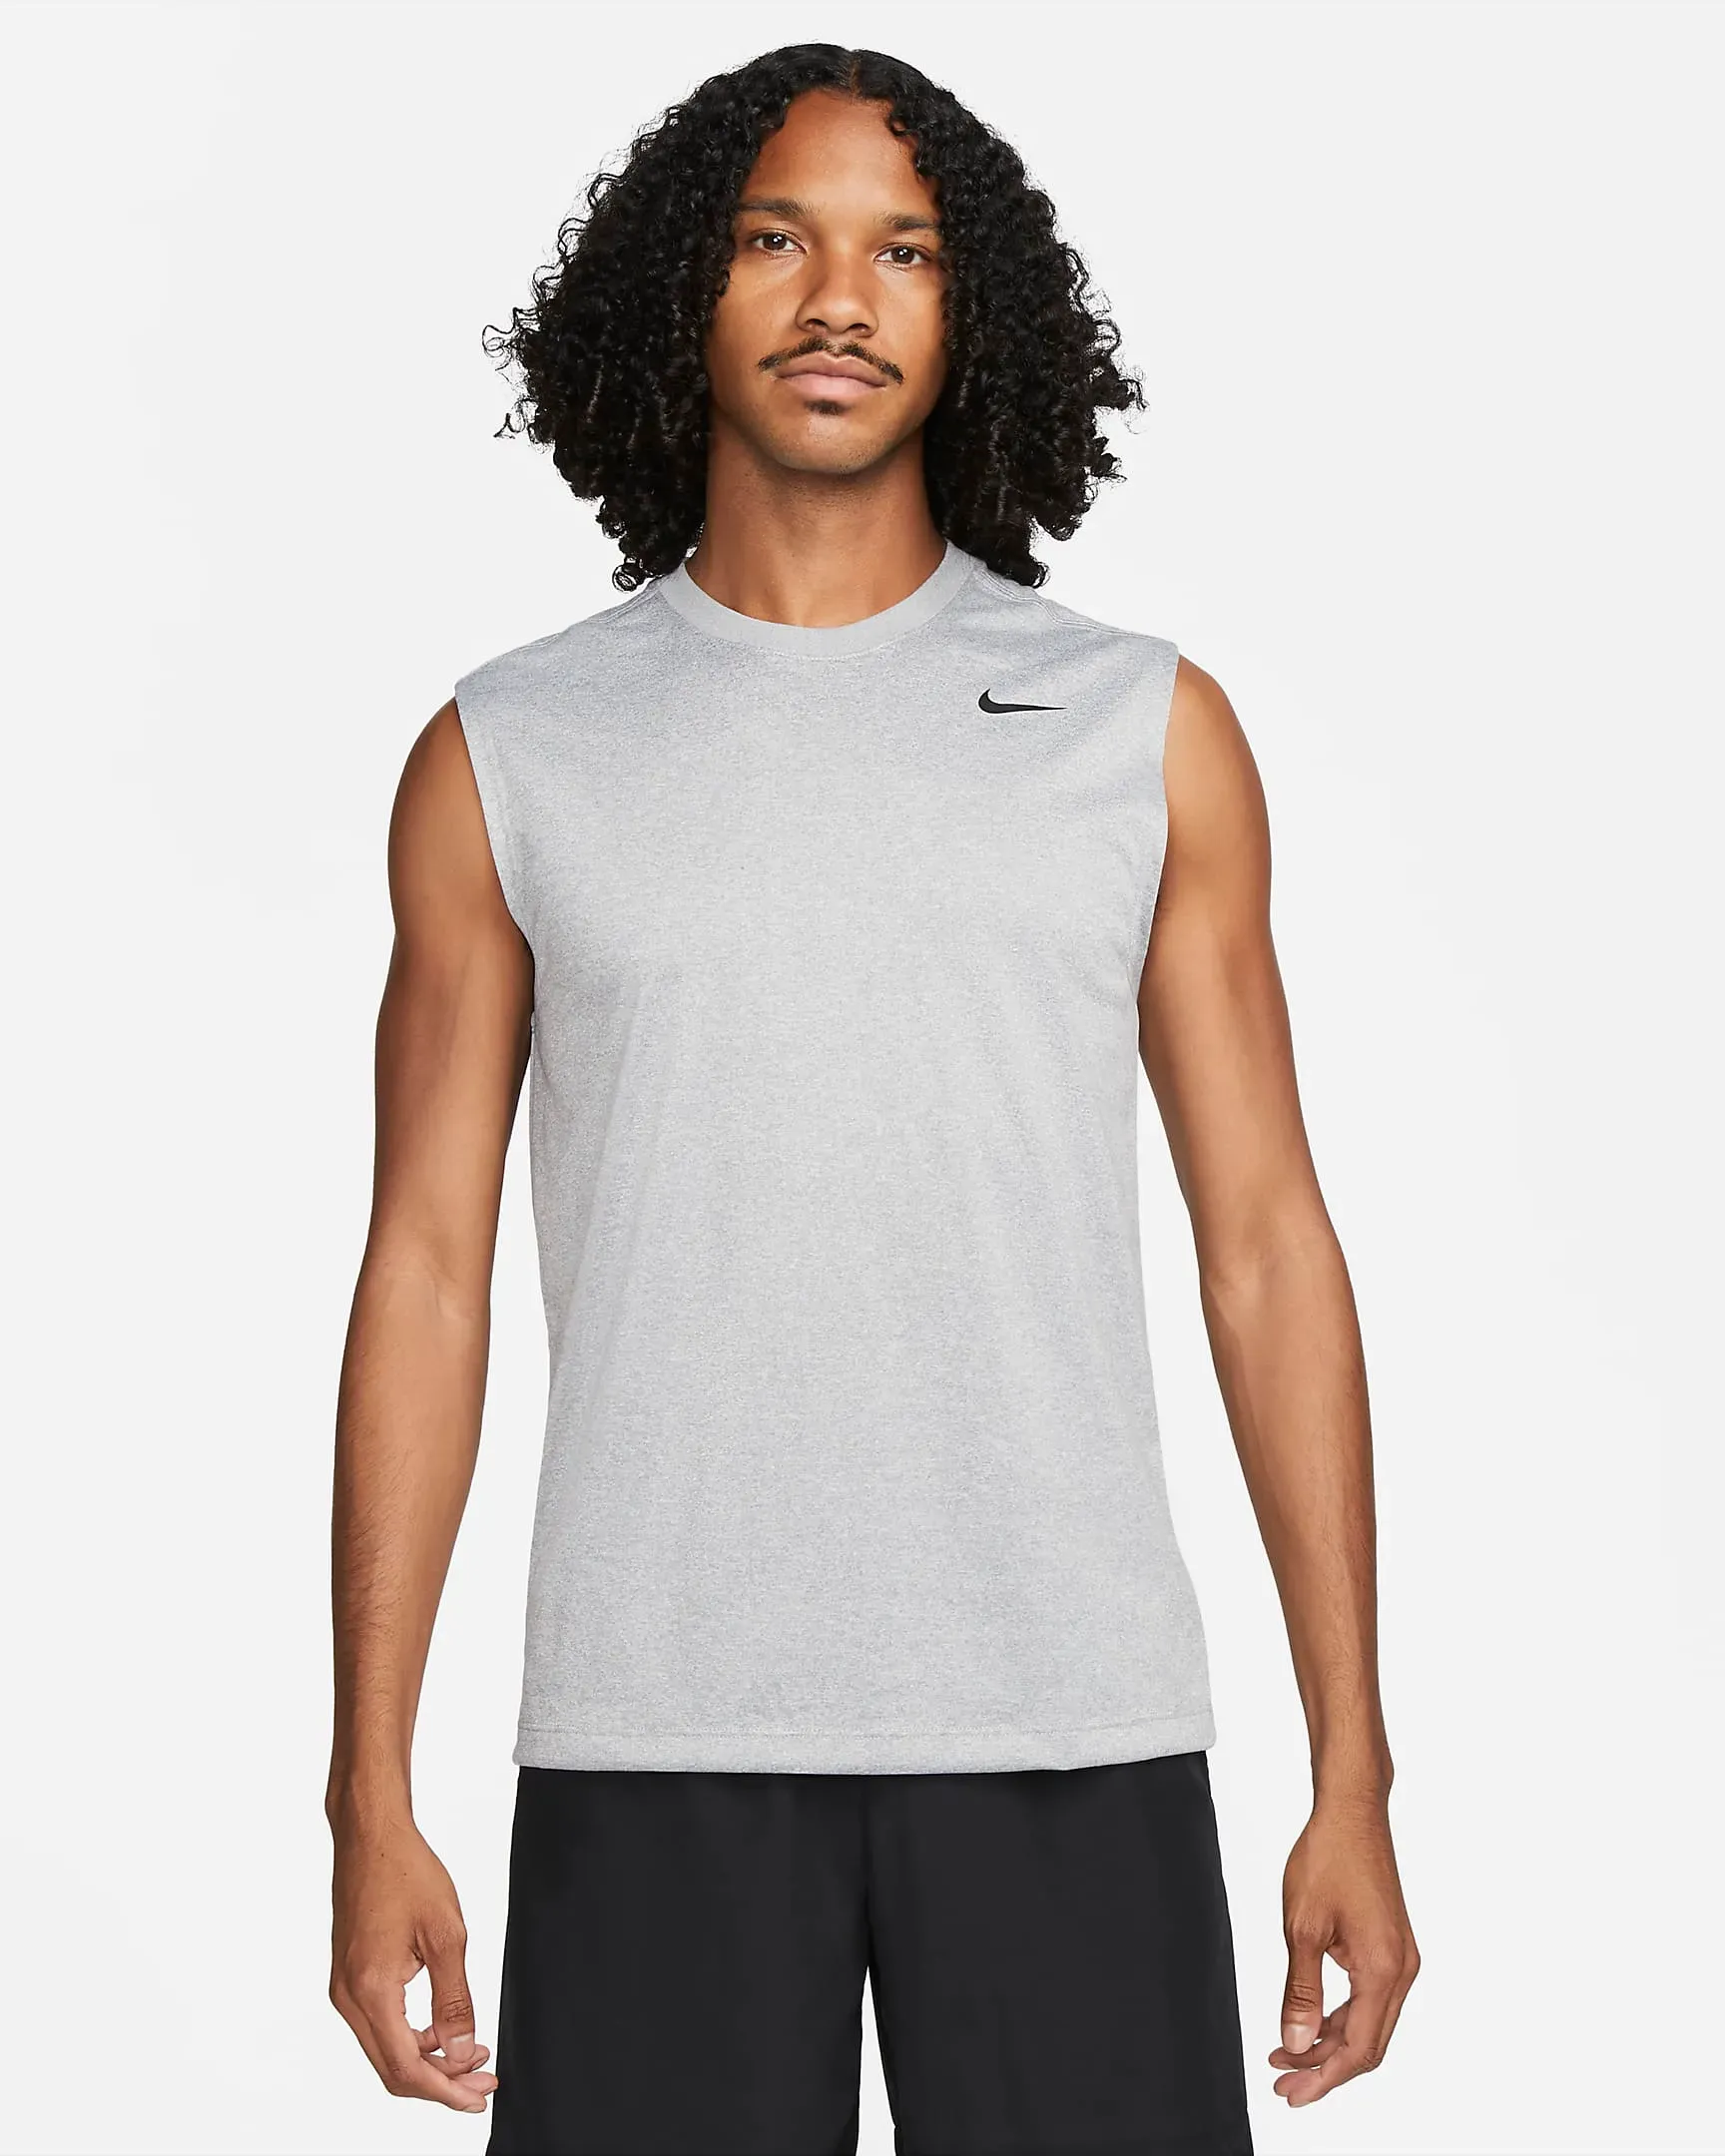 Foto Nike Dri-FIT Leyenda
Camiseta deportiva sin mangas para hombre